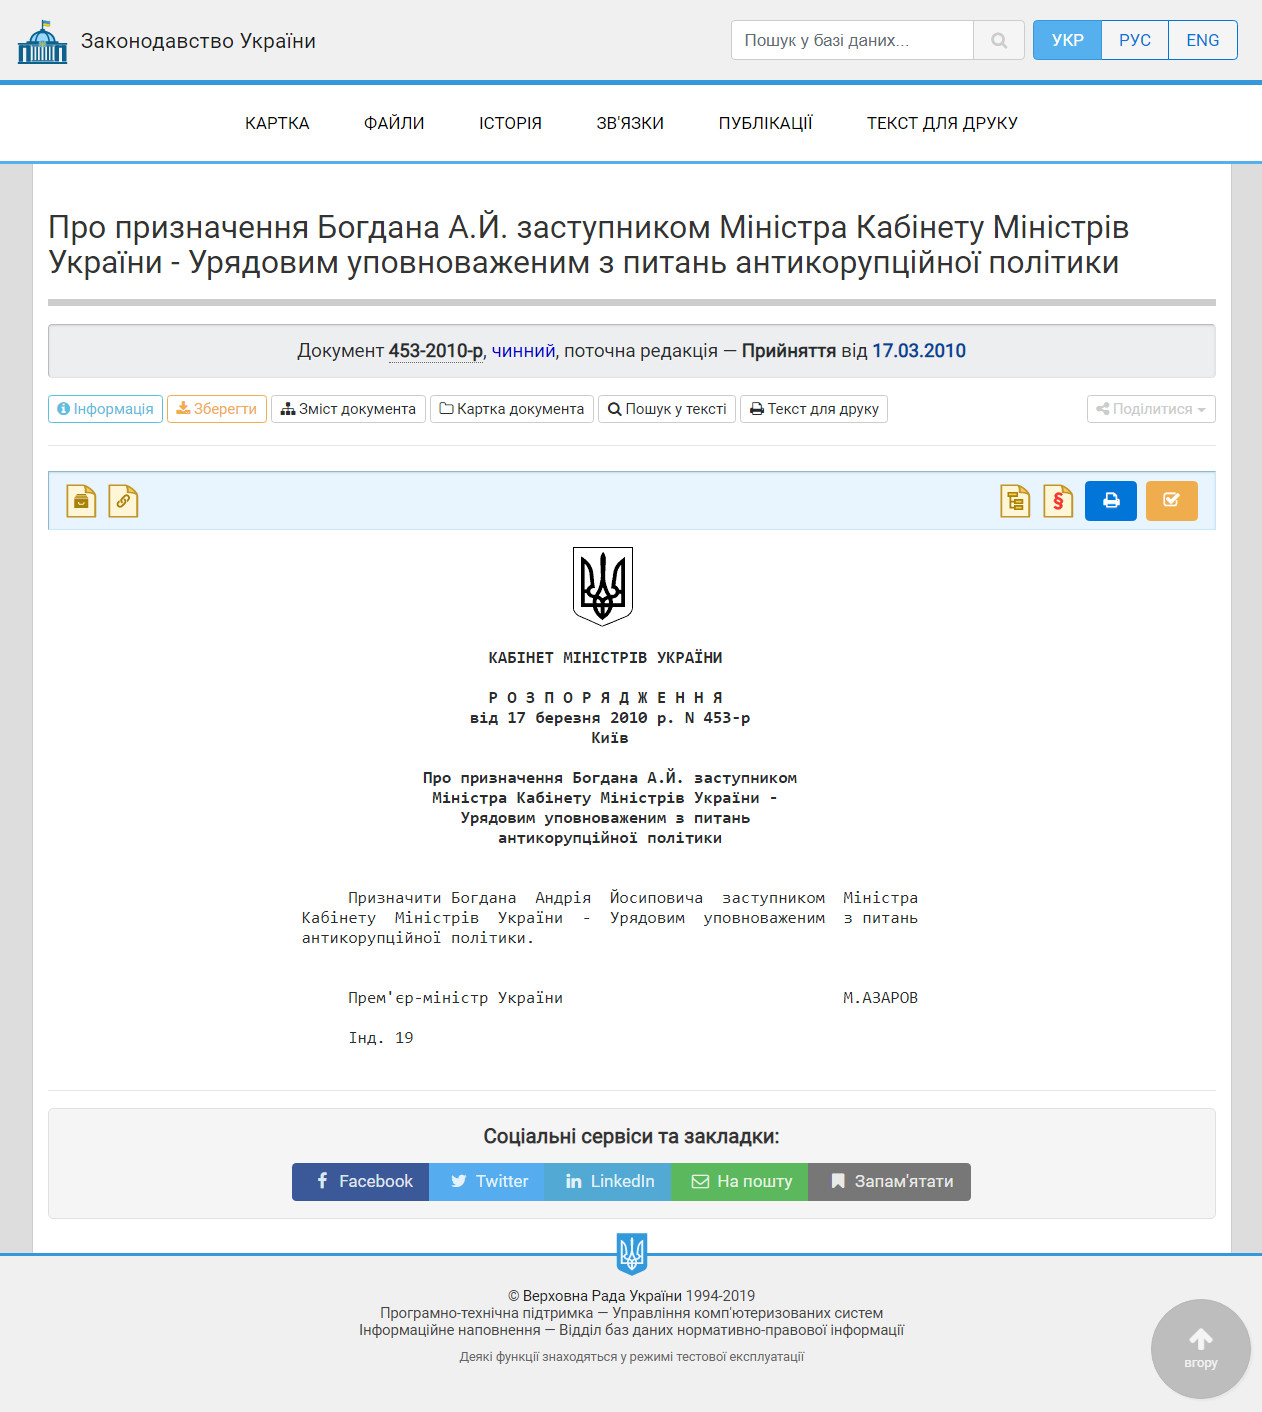 https://zakon.rada.gov.ua/laws/show/453-2010-%D1%80